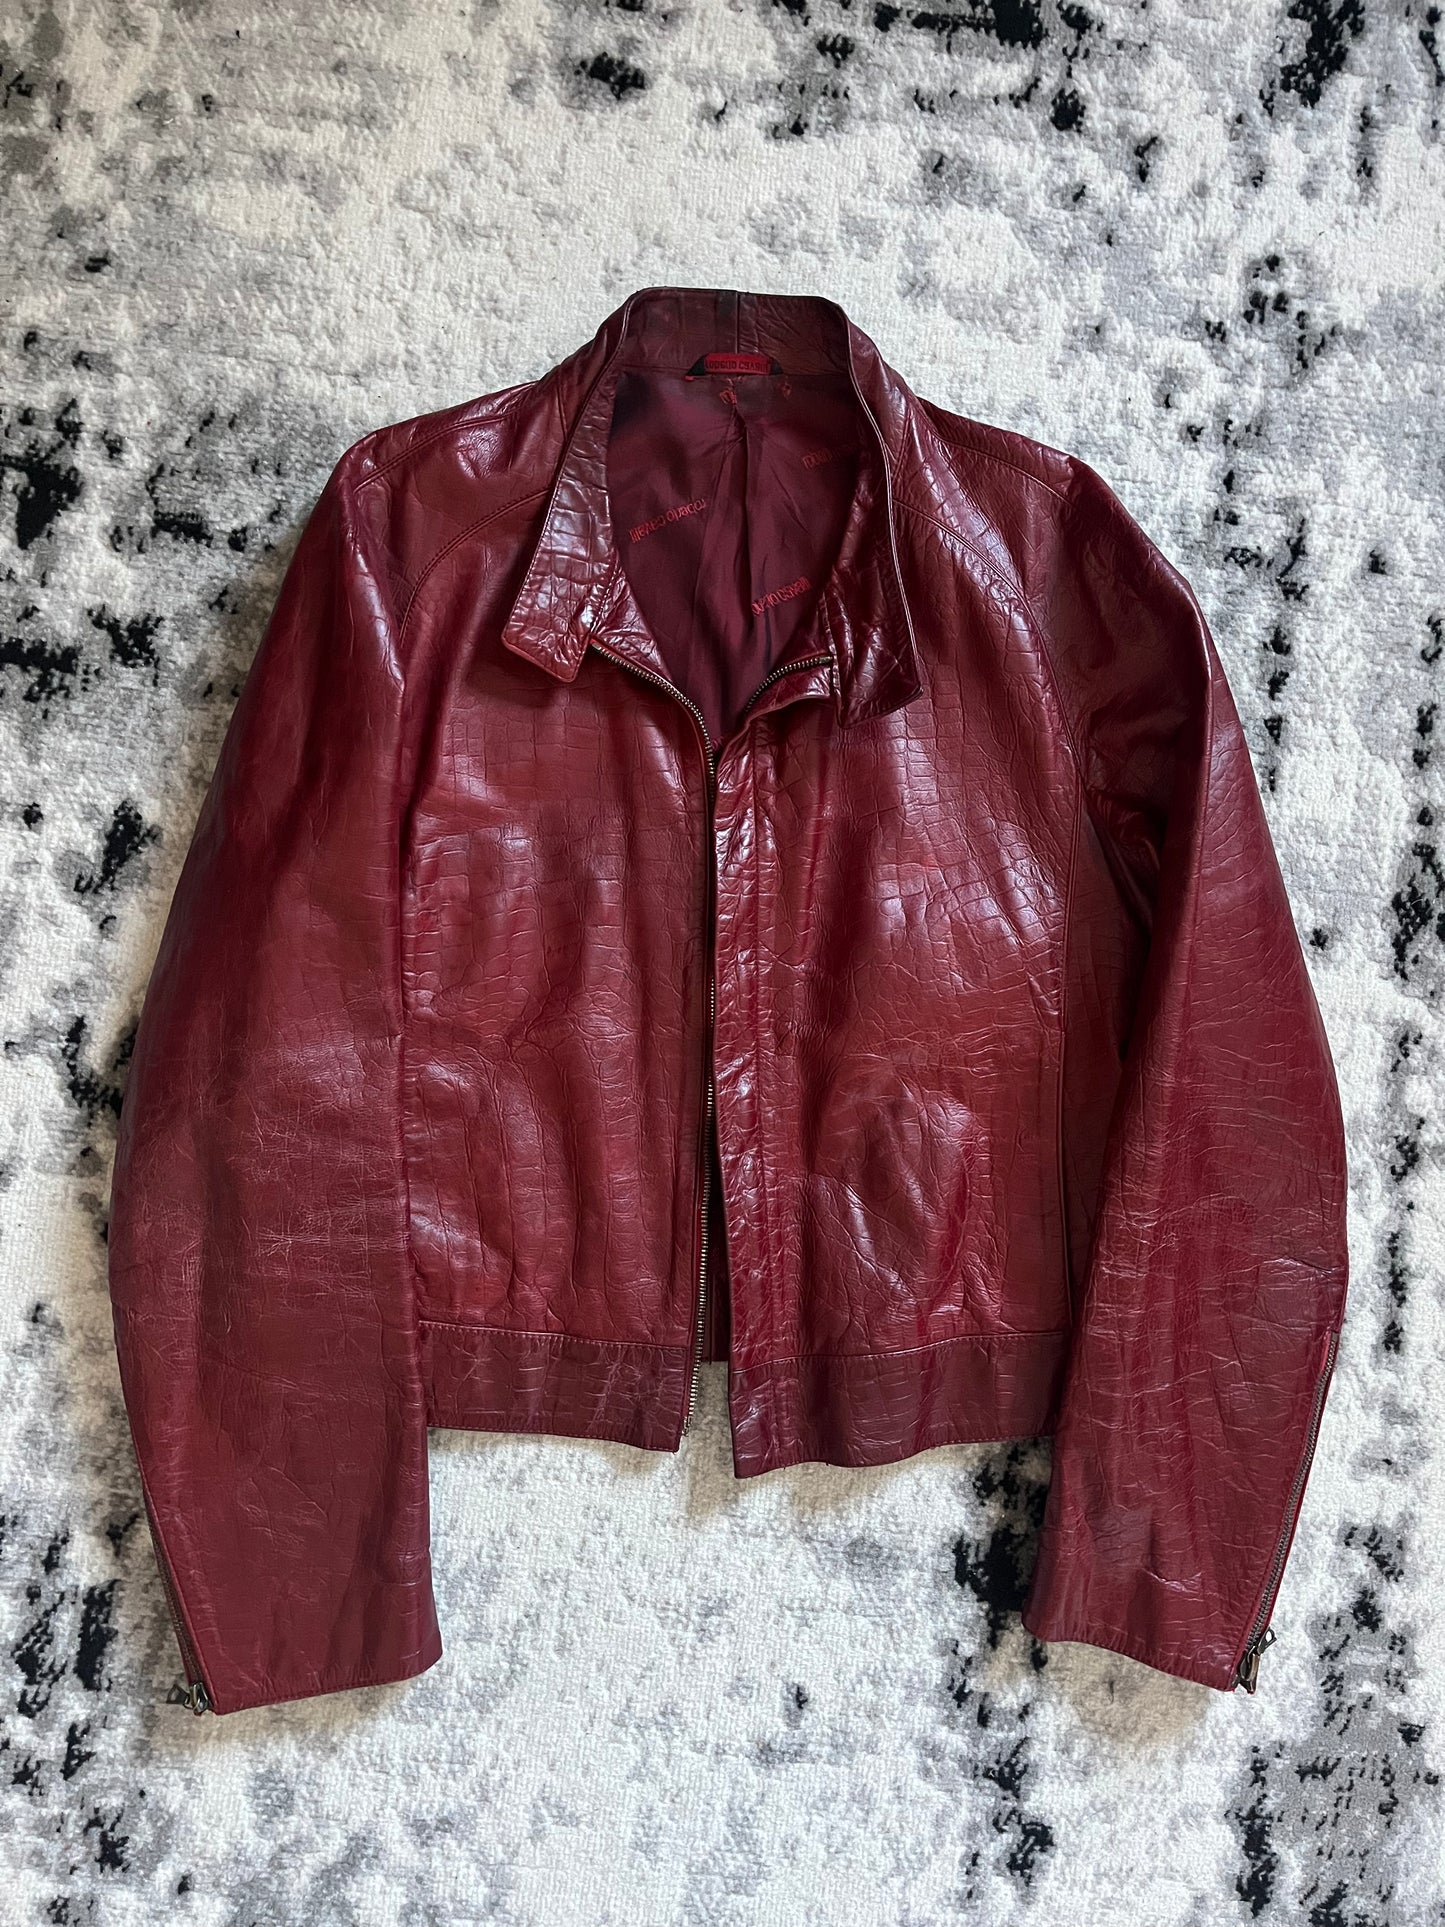 FW2000 Roberto Cavalli Crocodile Red Leather Jacket (M)